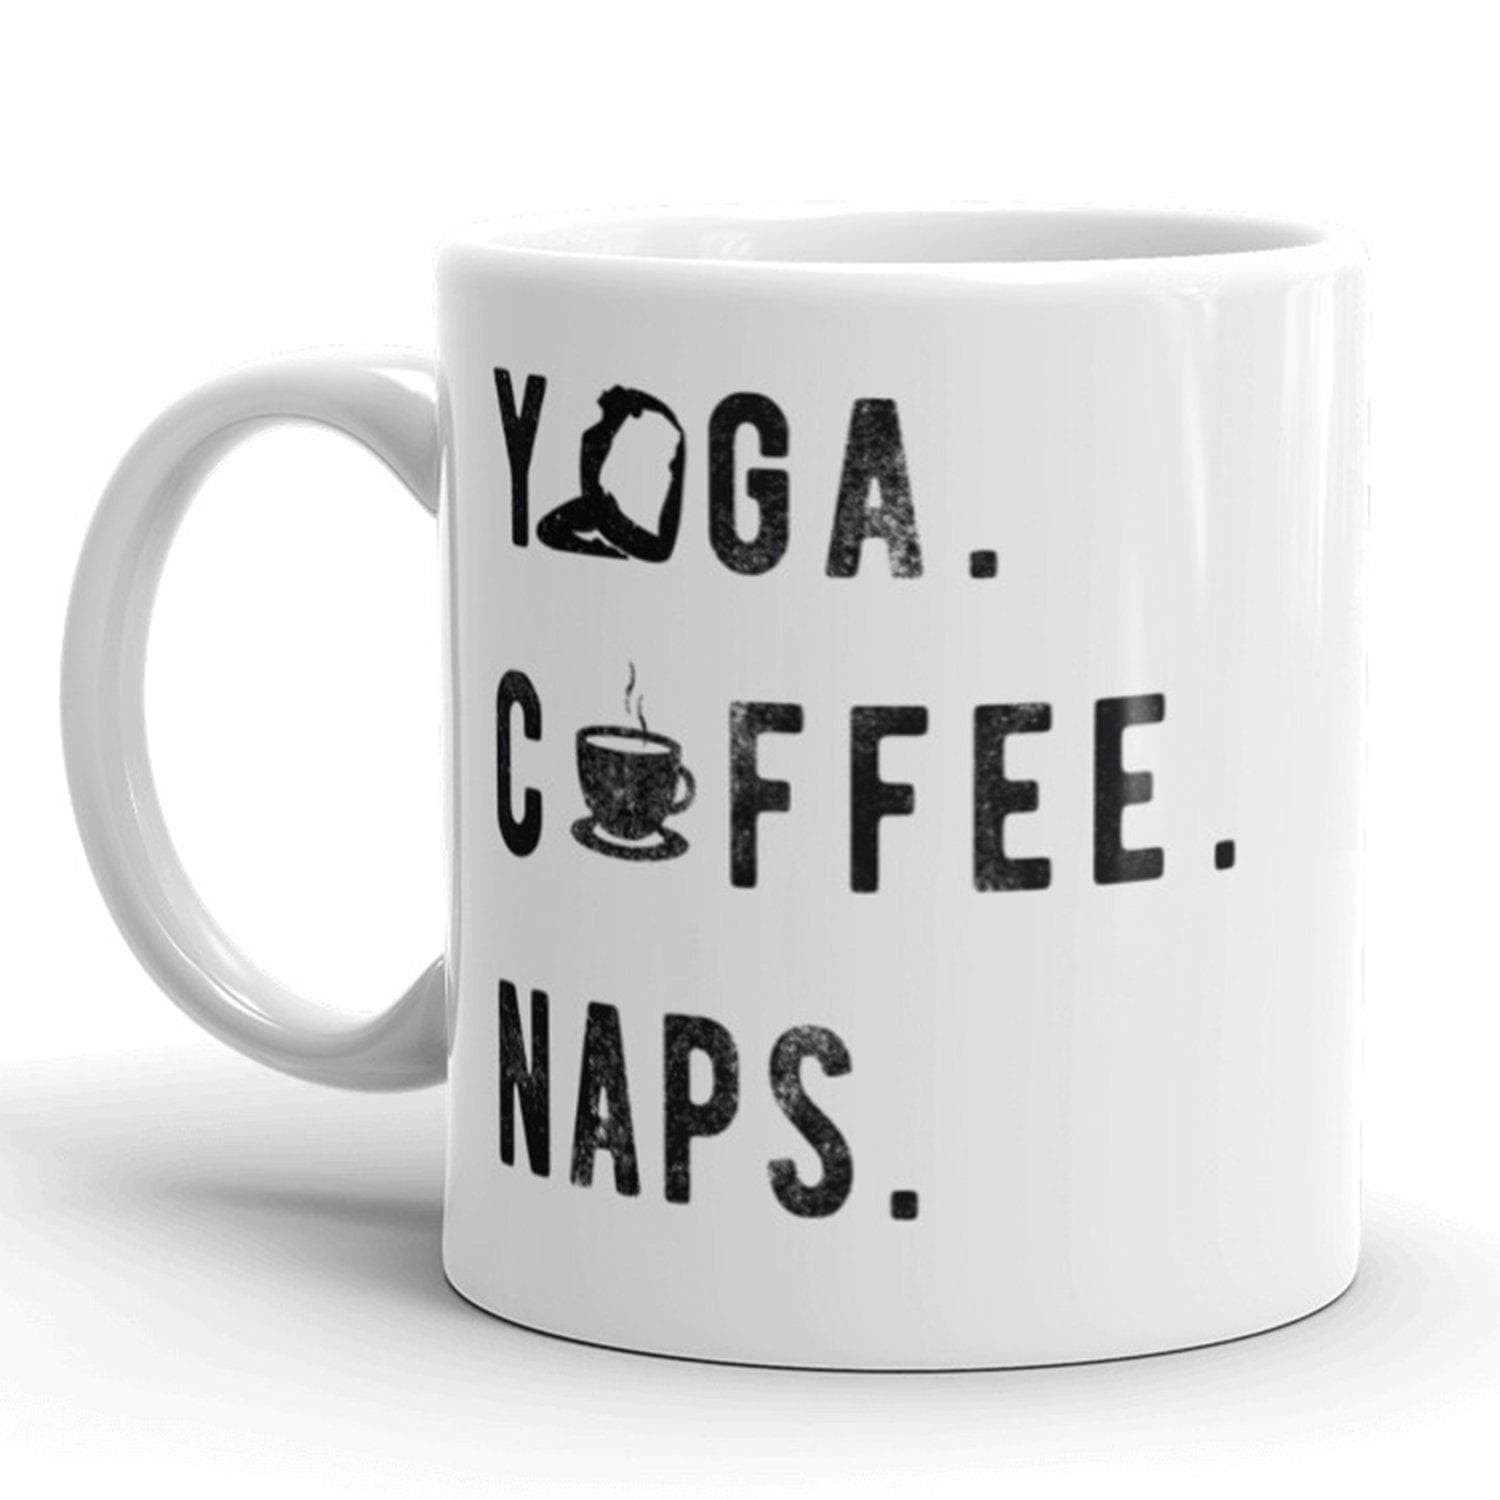 Yoga Coffee Naps Mug - Crazy Dog T-Shirts